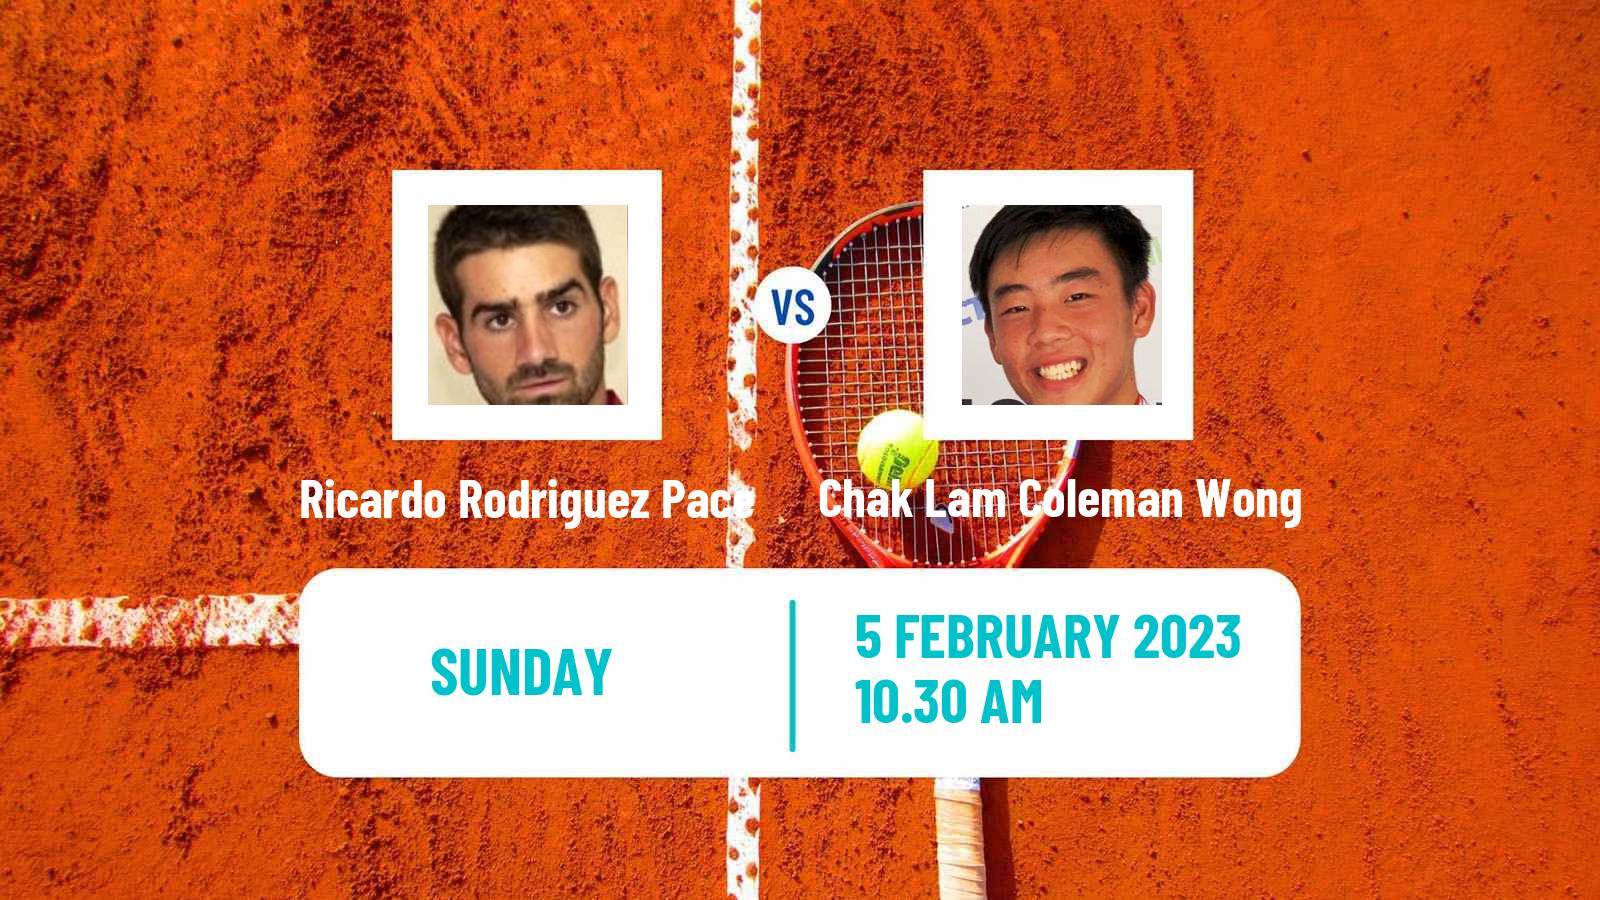 Tennis Davis Cup World Group II Ricardo Rodriguez Pace - Chak Lam Coleman Wong